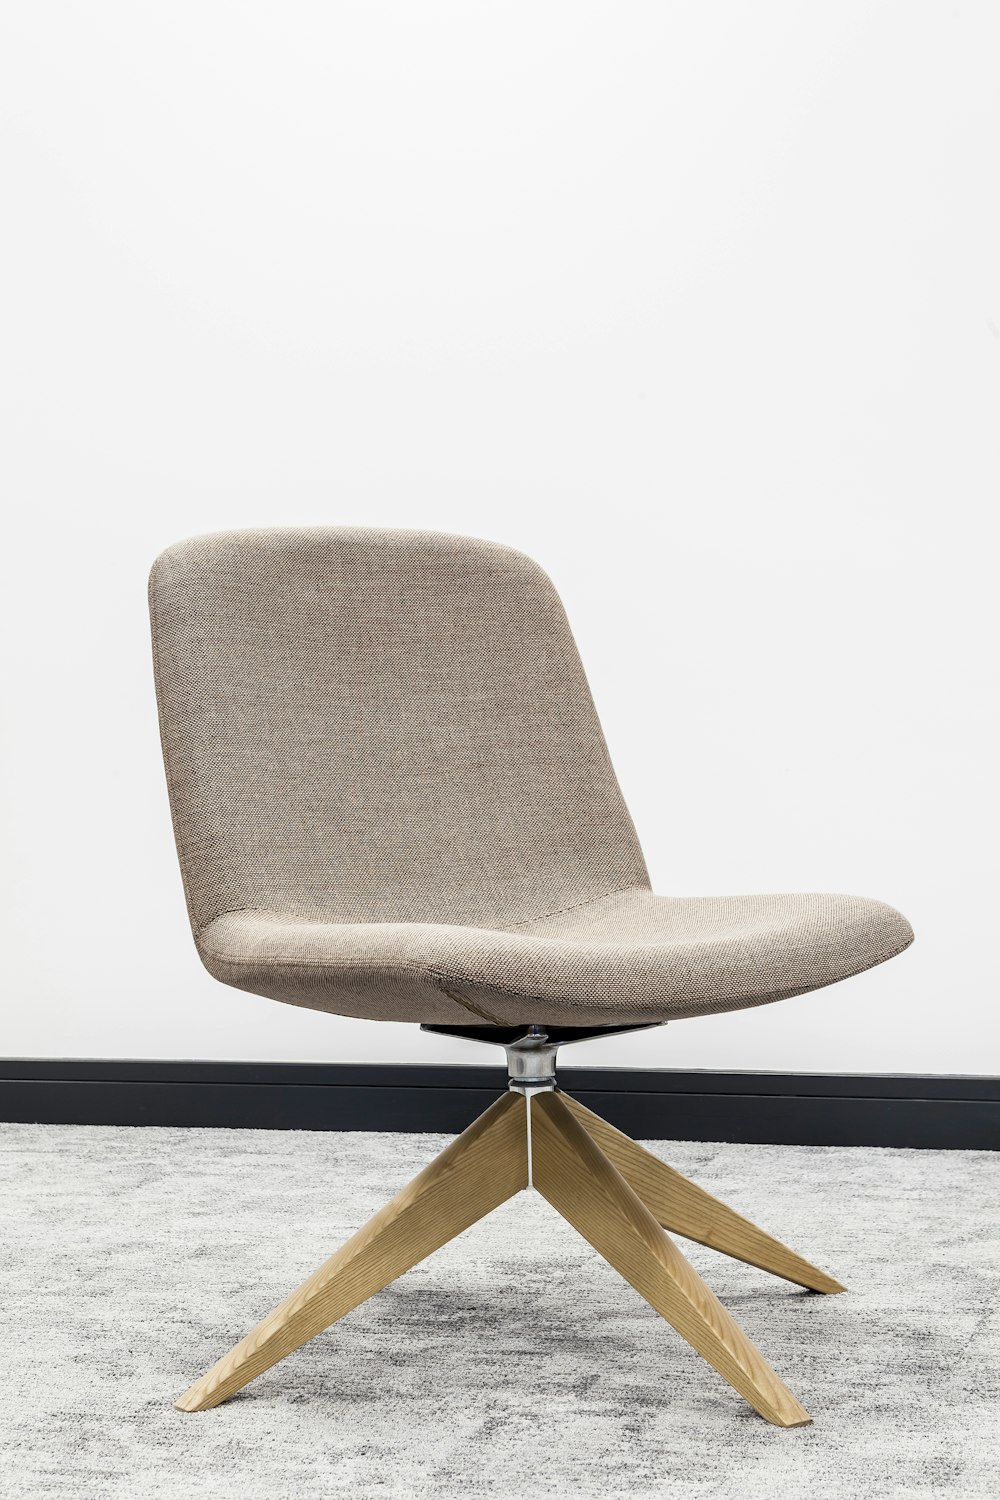 silla acolchada gris con marco de madera marrón